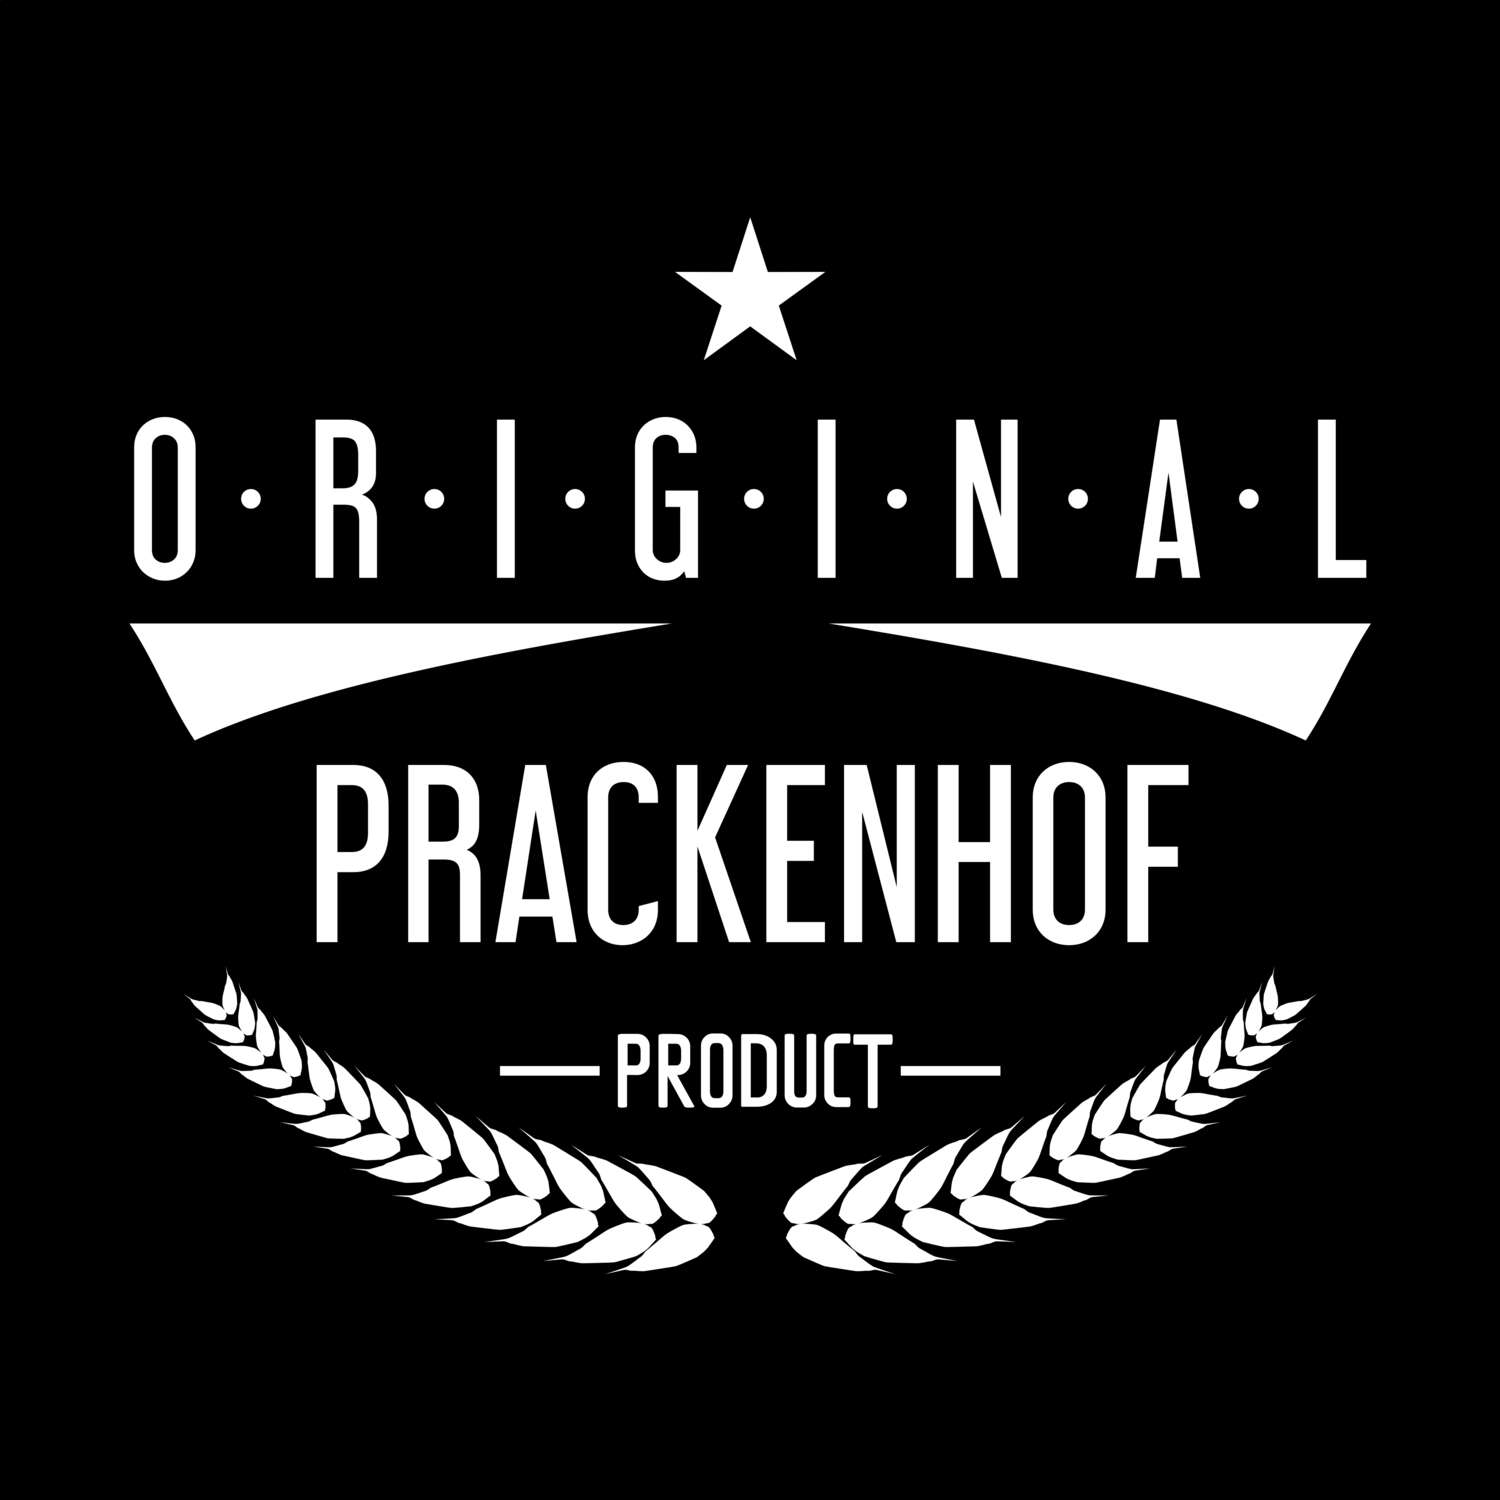 Prackenhof T-Shirt »Original Product«